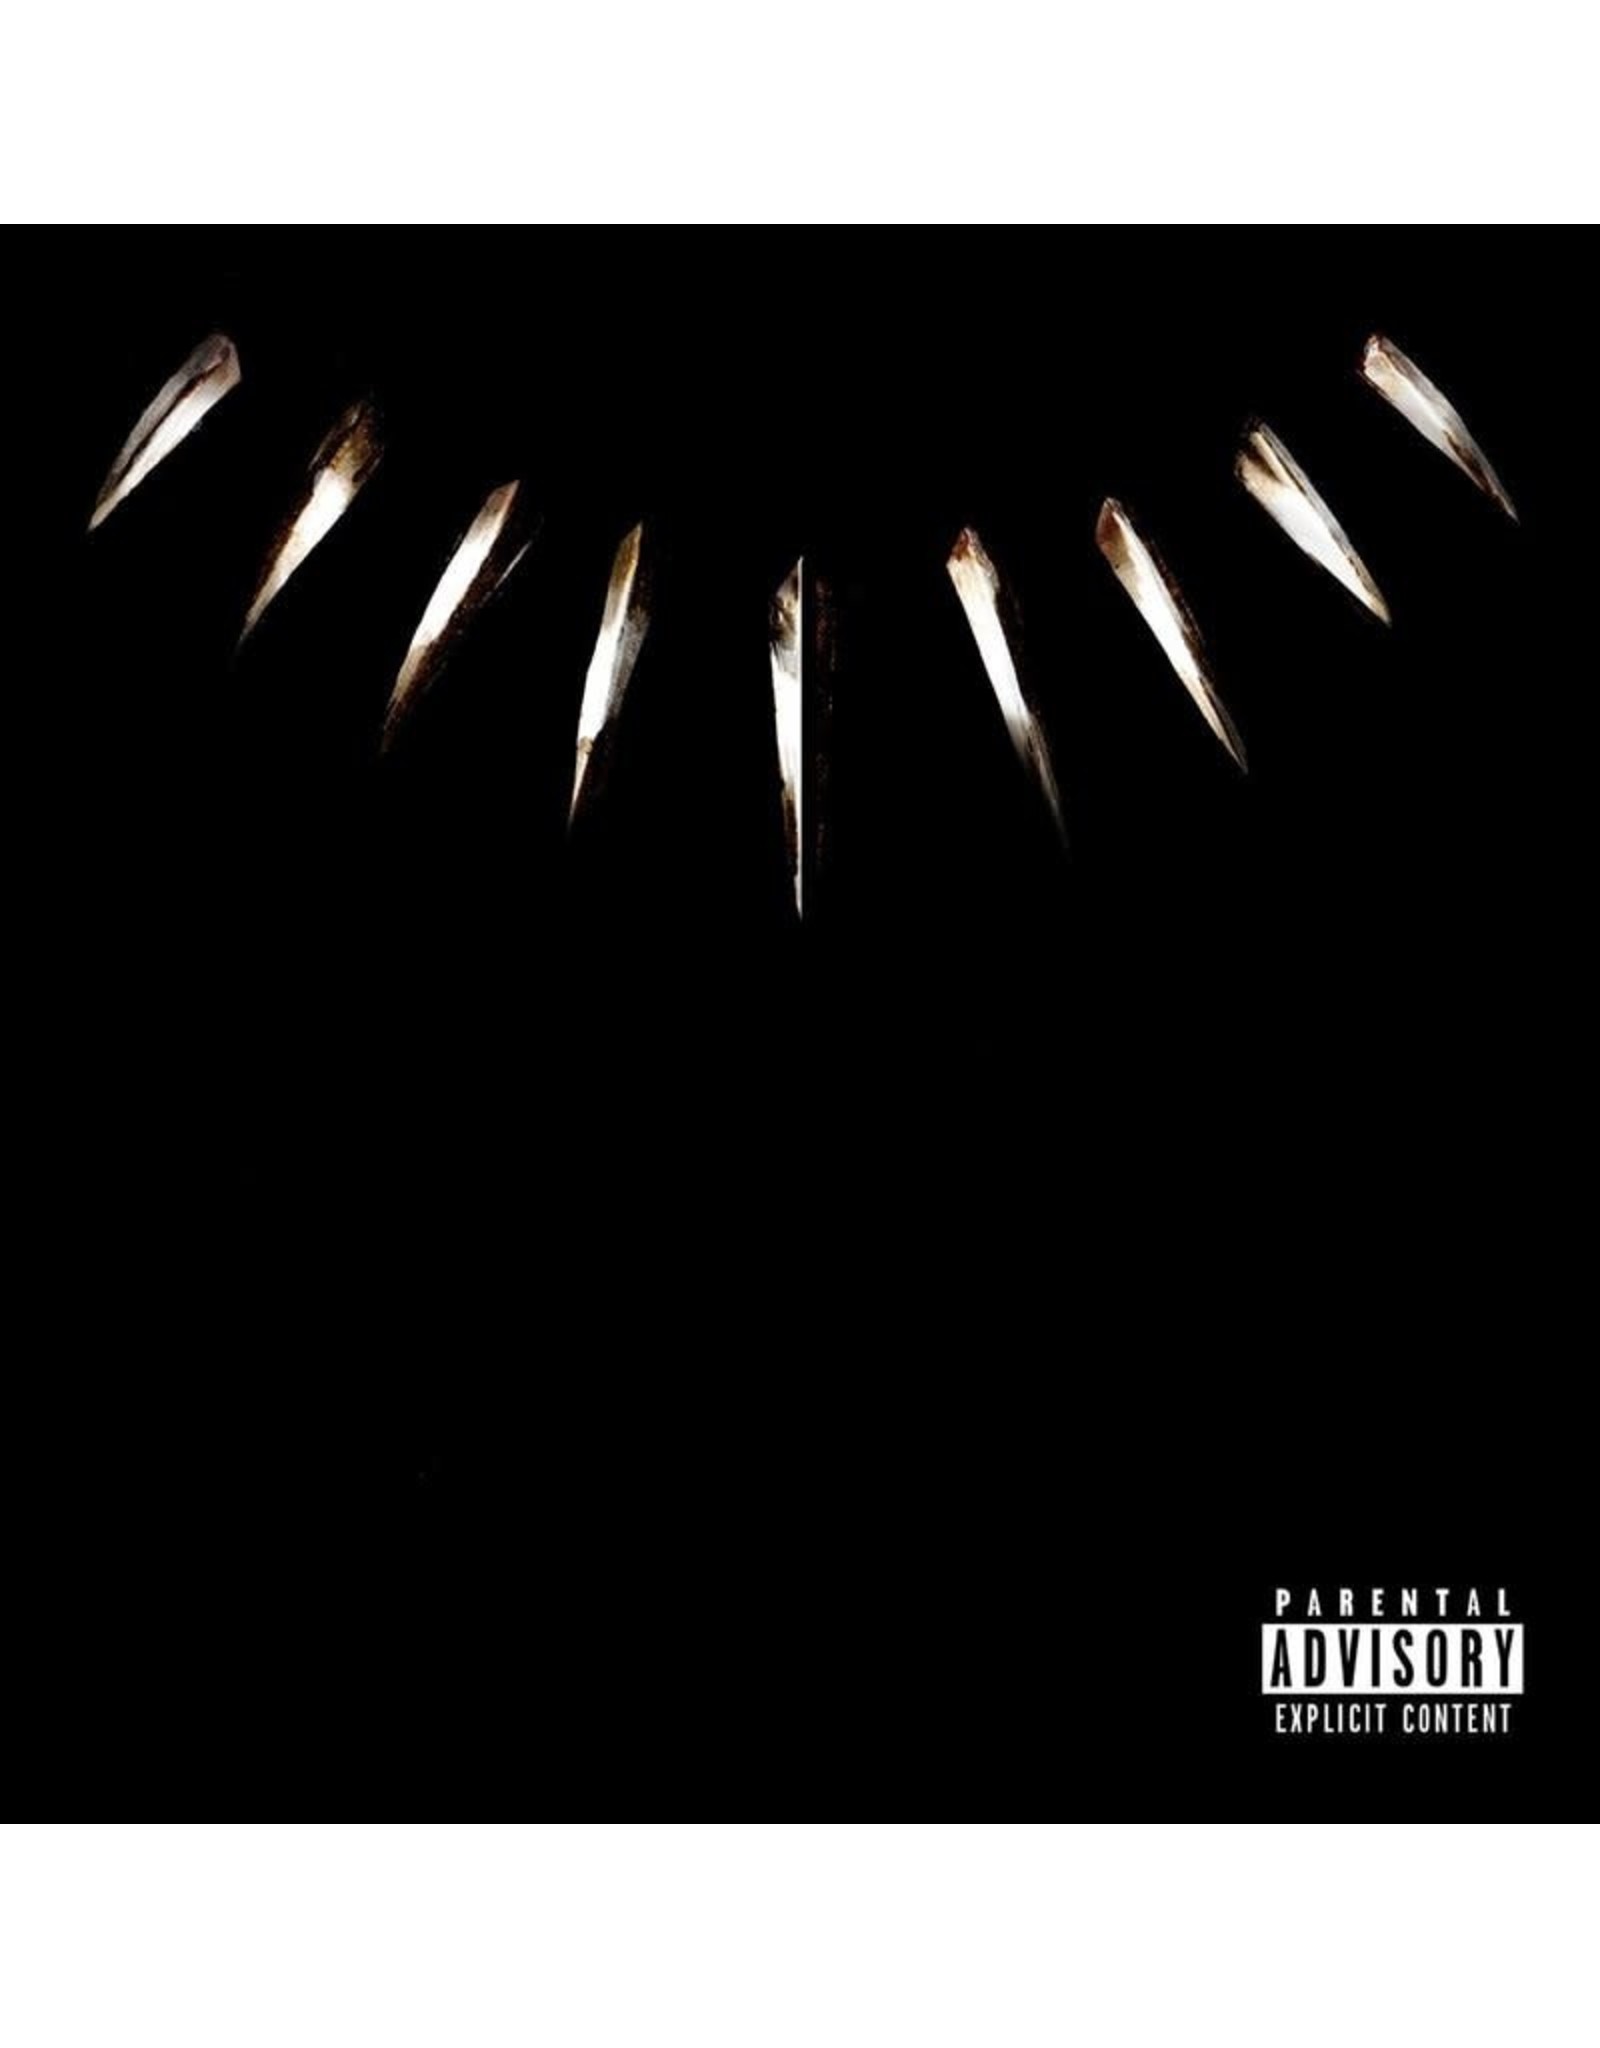 Various - Black Panther (Original Motion Picture Soundtrack)